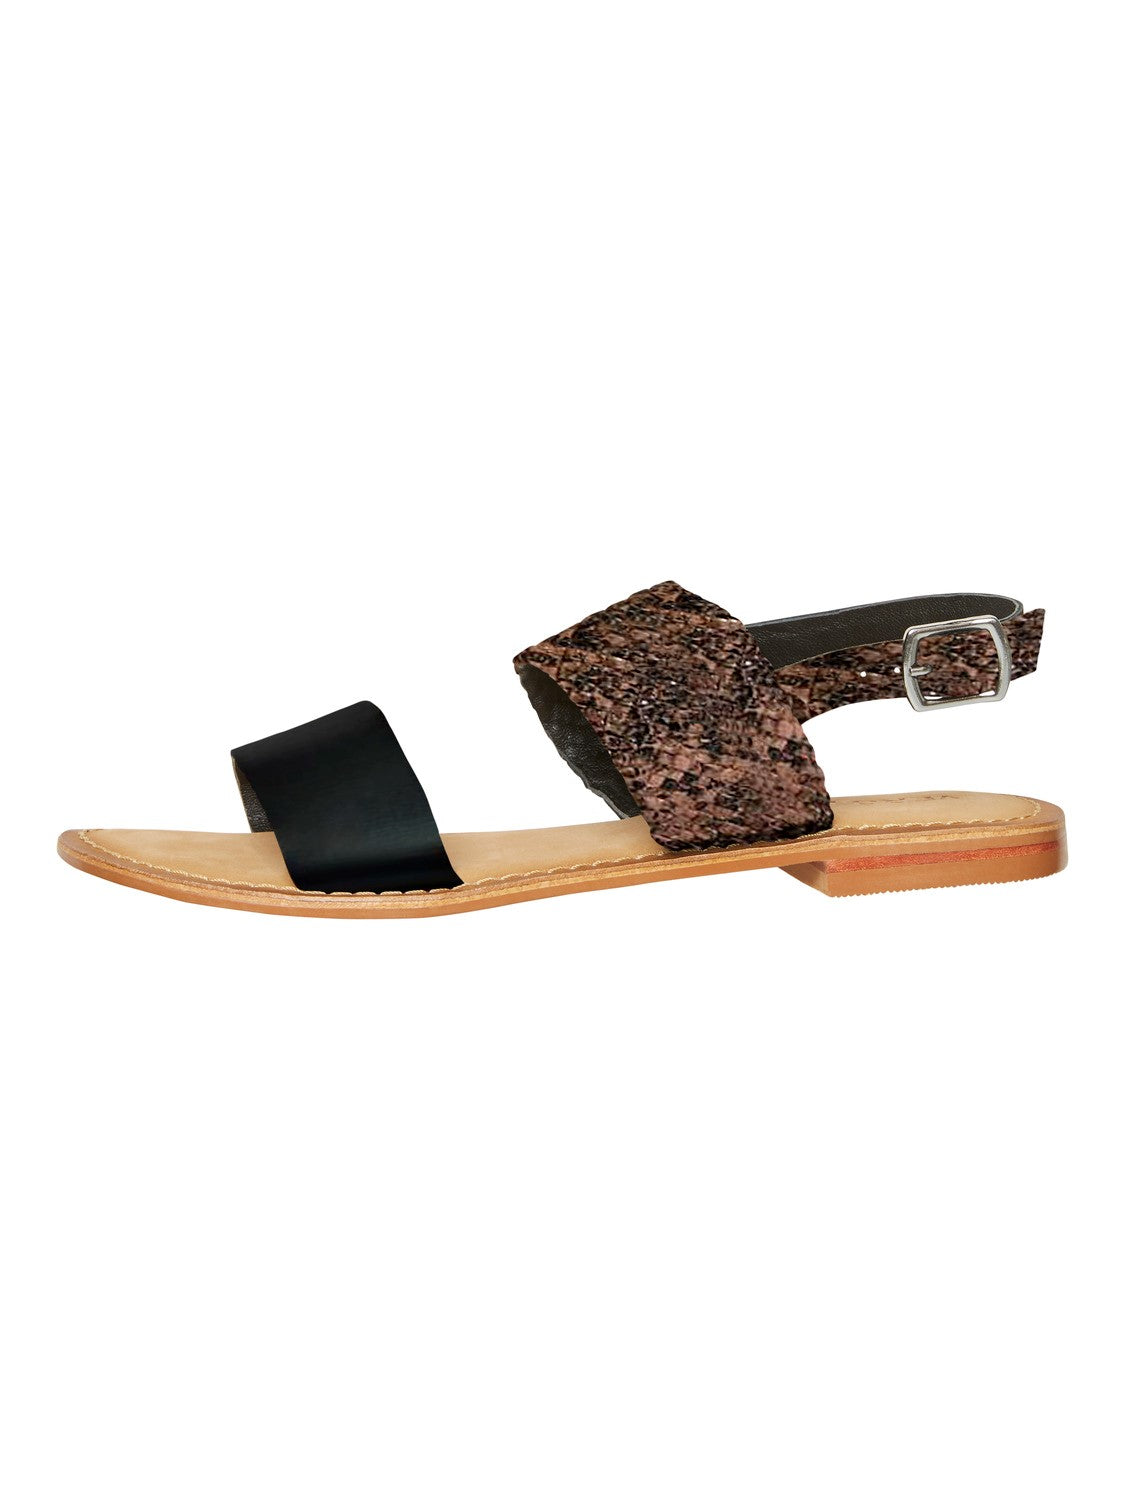 Vero Moda Pinota Leather Sandals - Birch